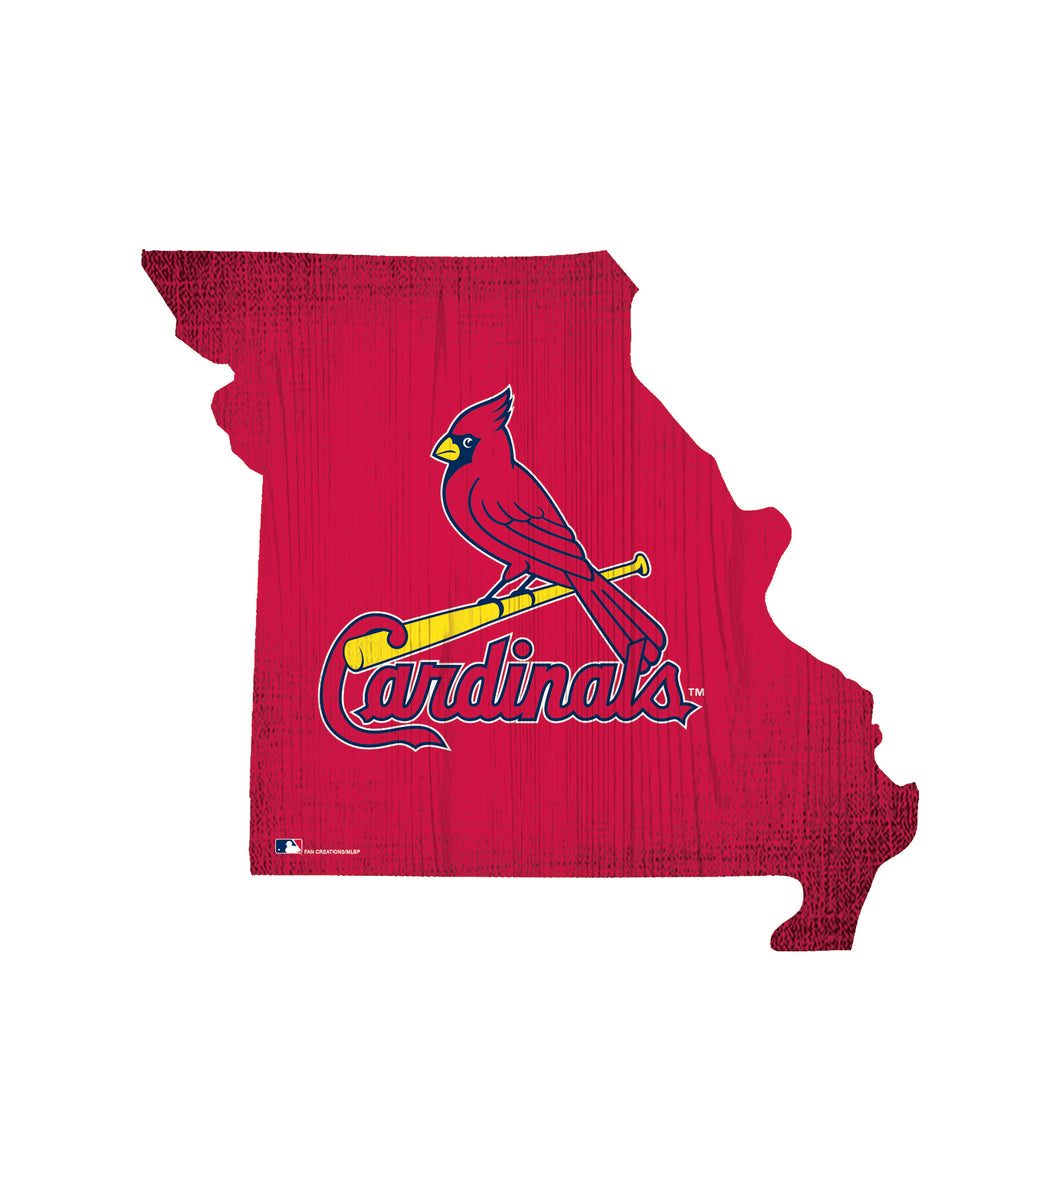 St. Lois Cardinals Cardinals Baseball Key Chain Great 